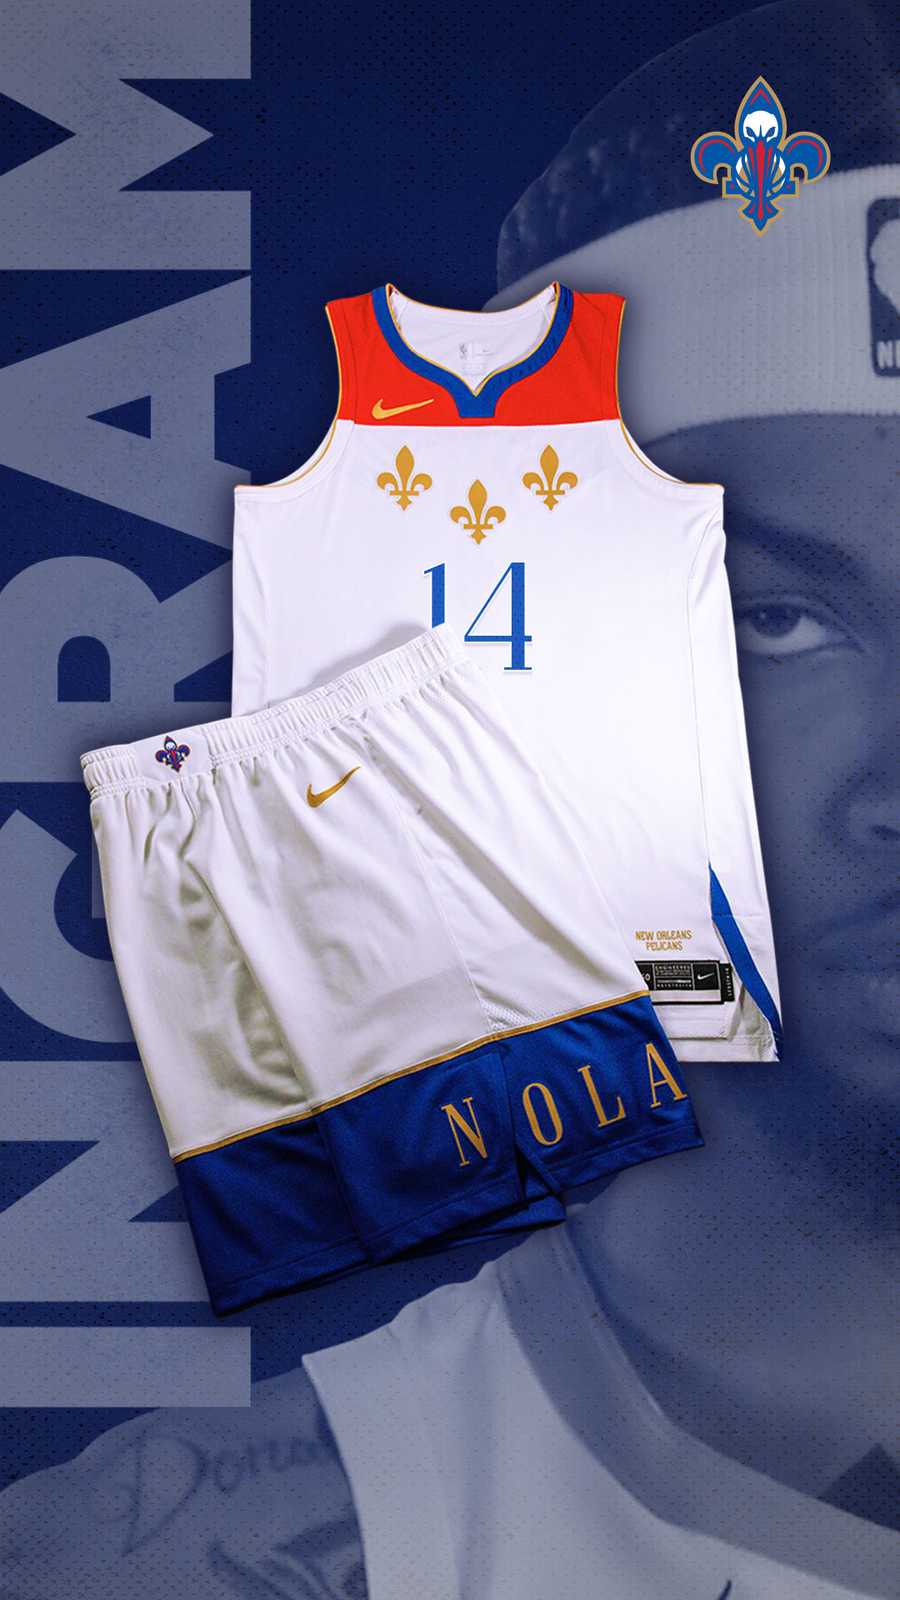 Pelicans debut new Crescent City 'Statement Identity' uniforms